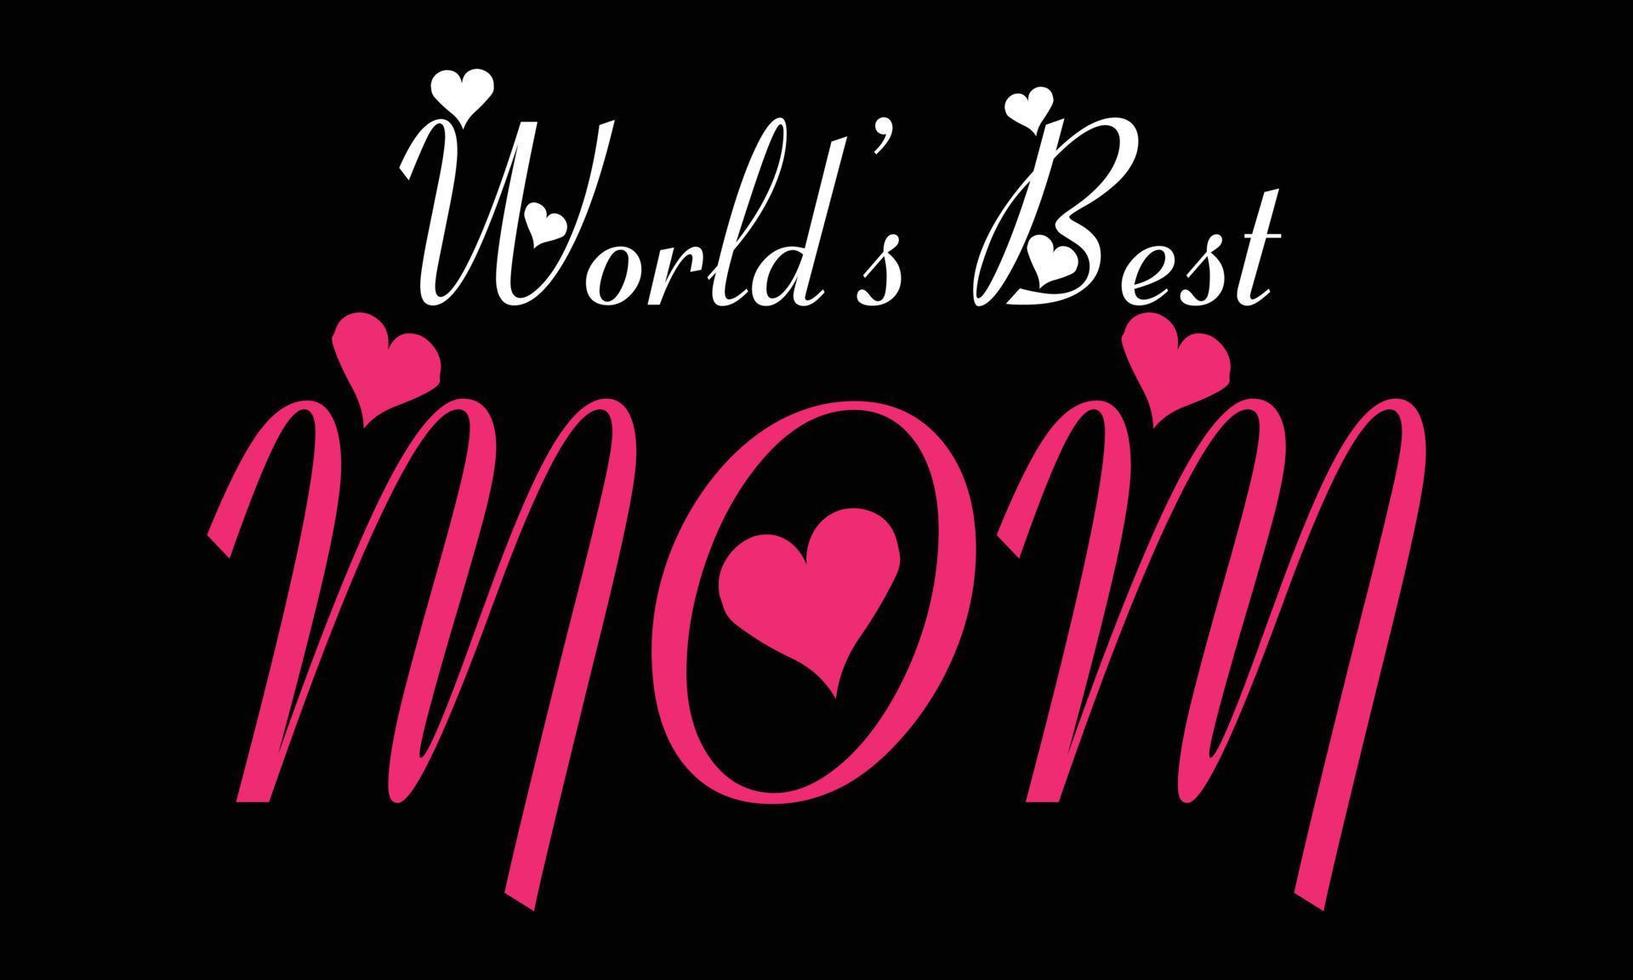 Happy Mothers day, Girls Mom, Retro Wavy SVG t-shirt Design. vector